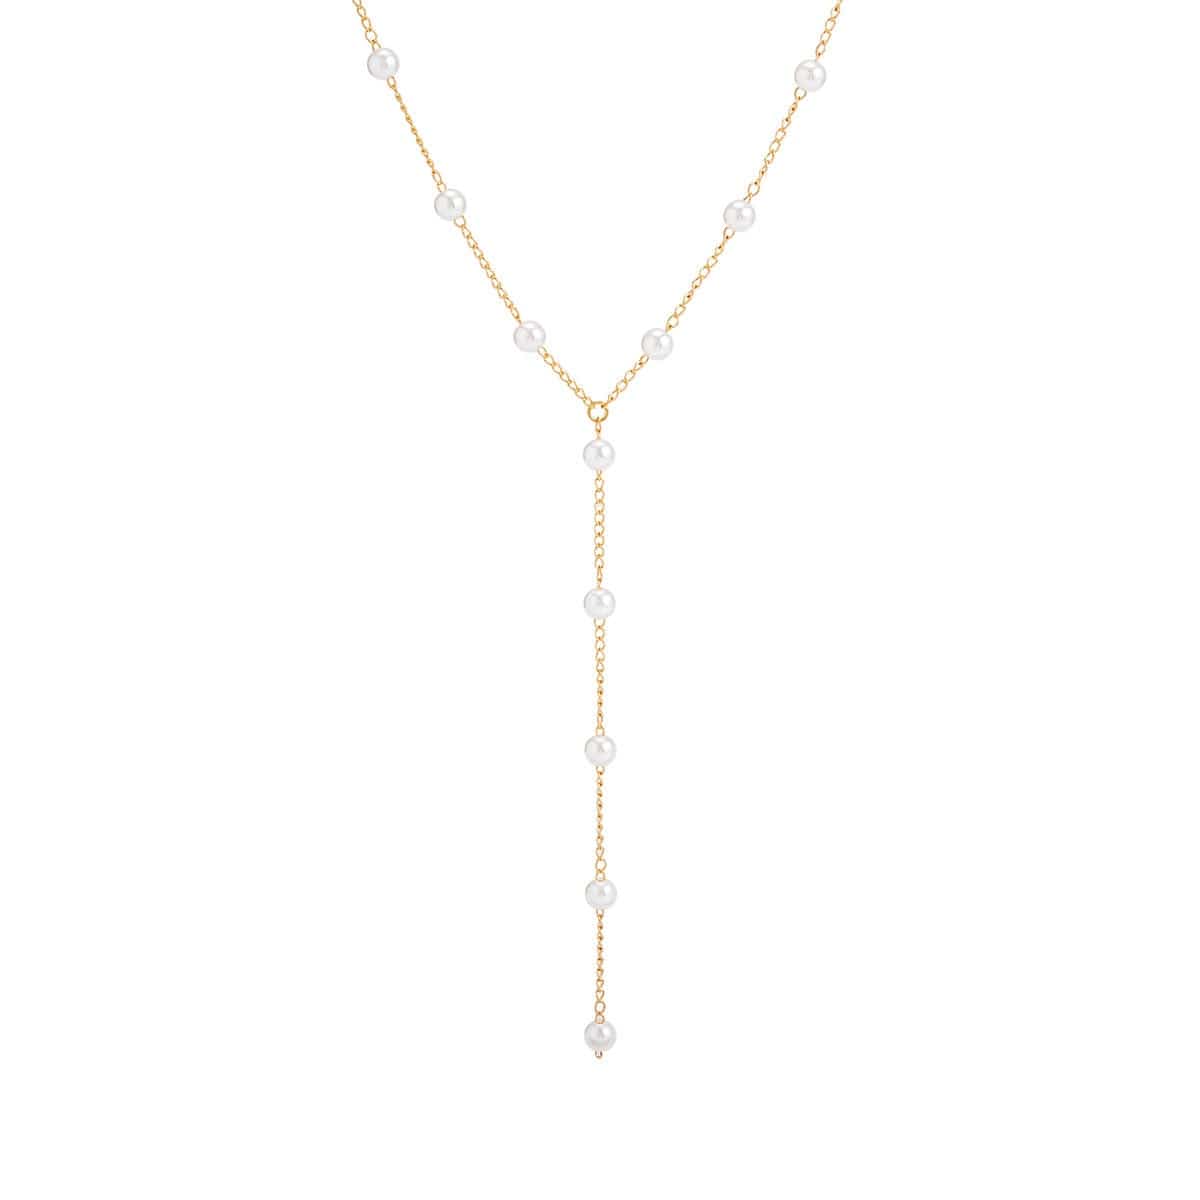 Boho Layered Toggle Clasp Pearl Chain Choker Necklace Set